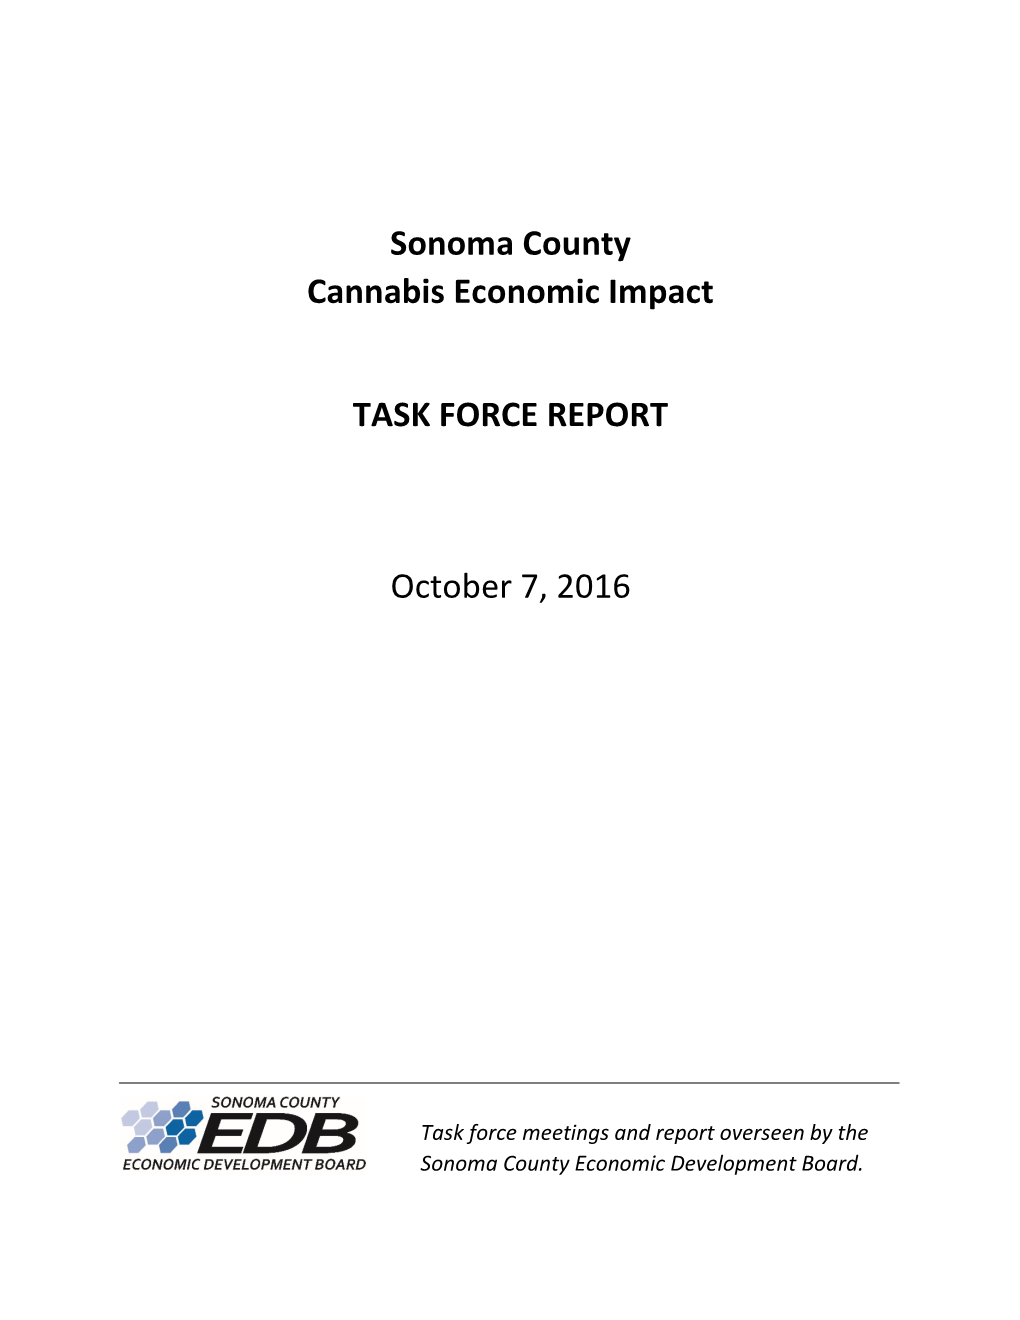 Sonoma County Cannabis Economic Impact Task Force Report